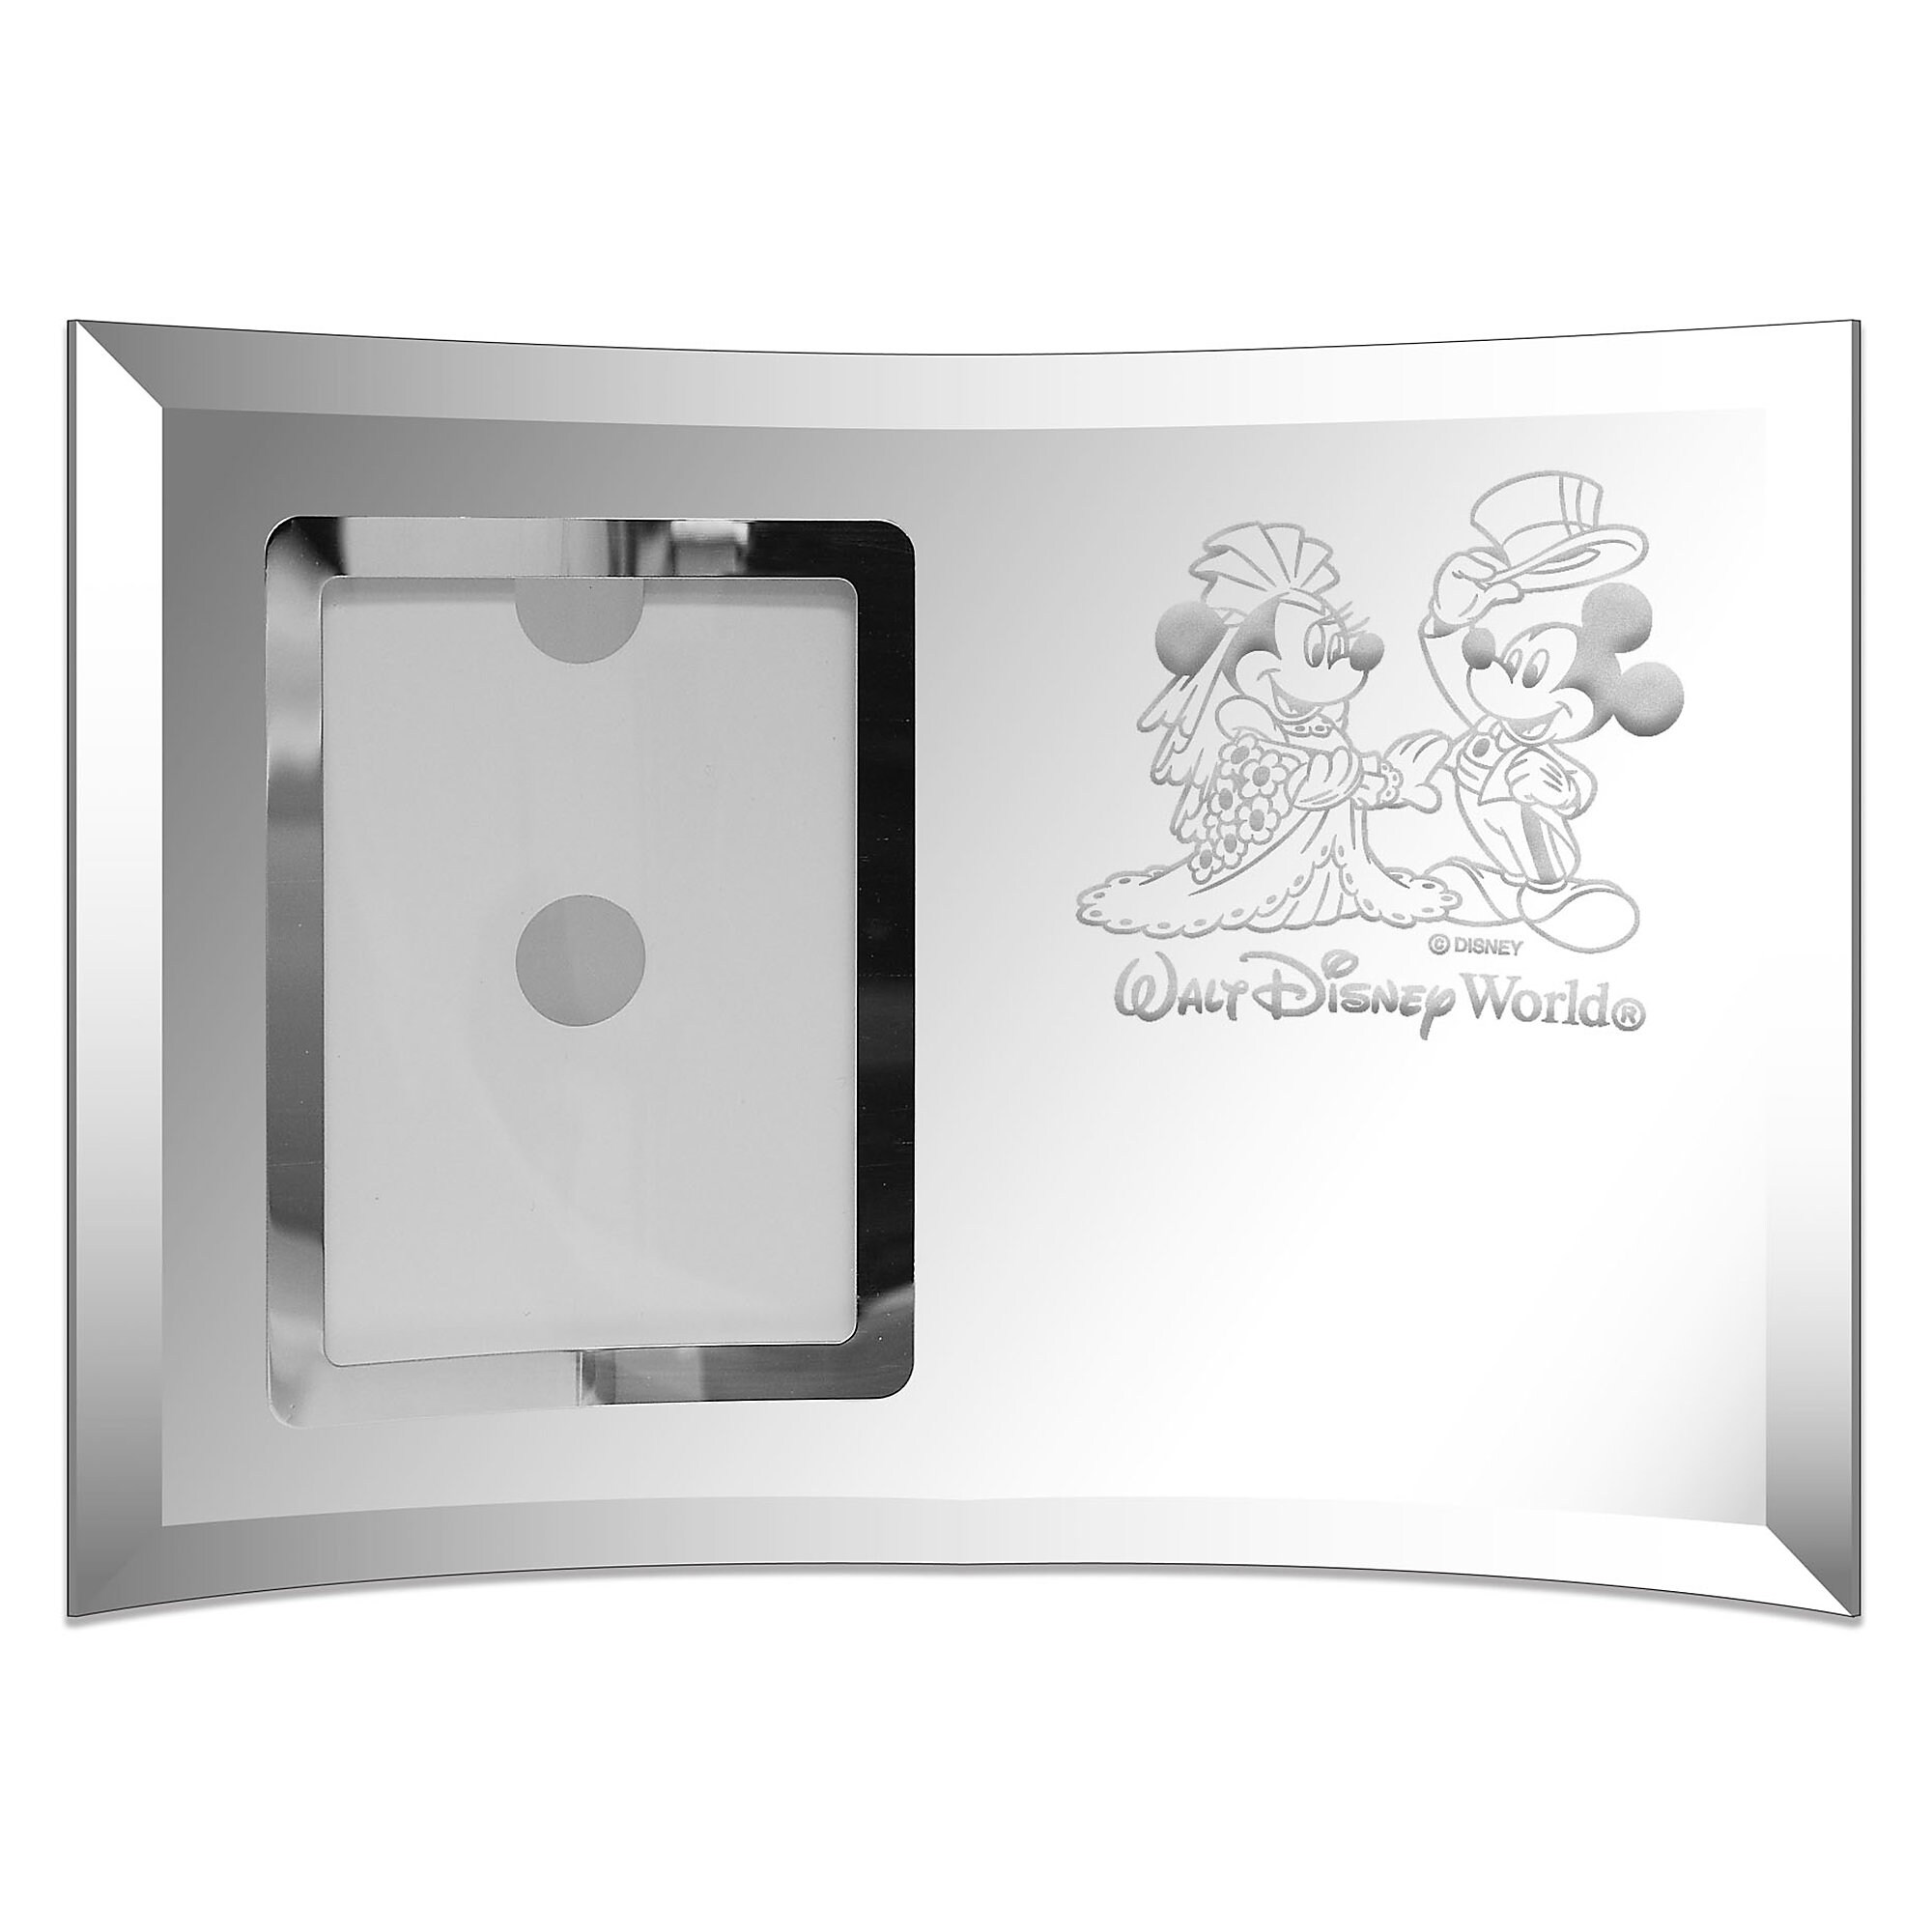 Mickey and Minnie Mouse Walt Disney World Glass Wedding Frame by Arribas - 4'' x 6'' - Personalizable